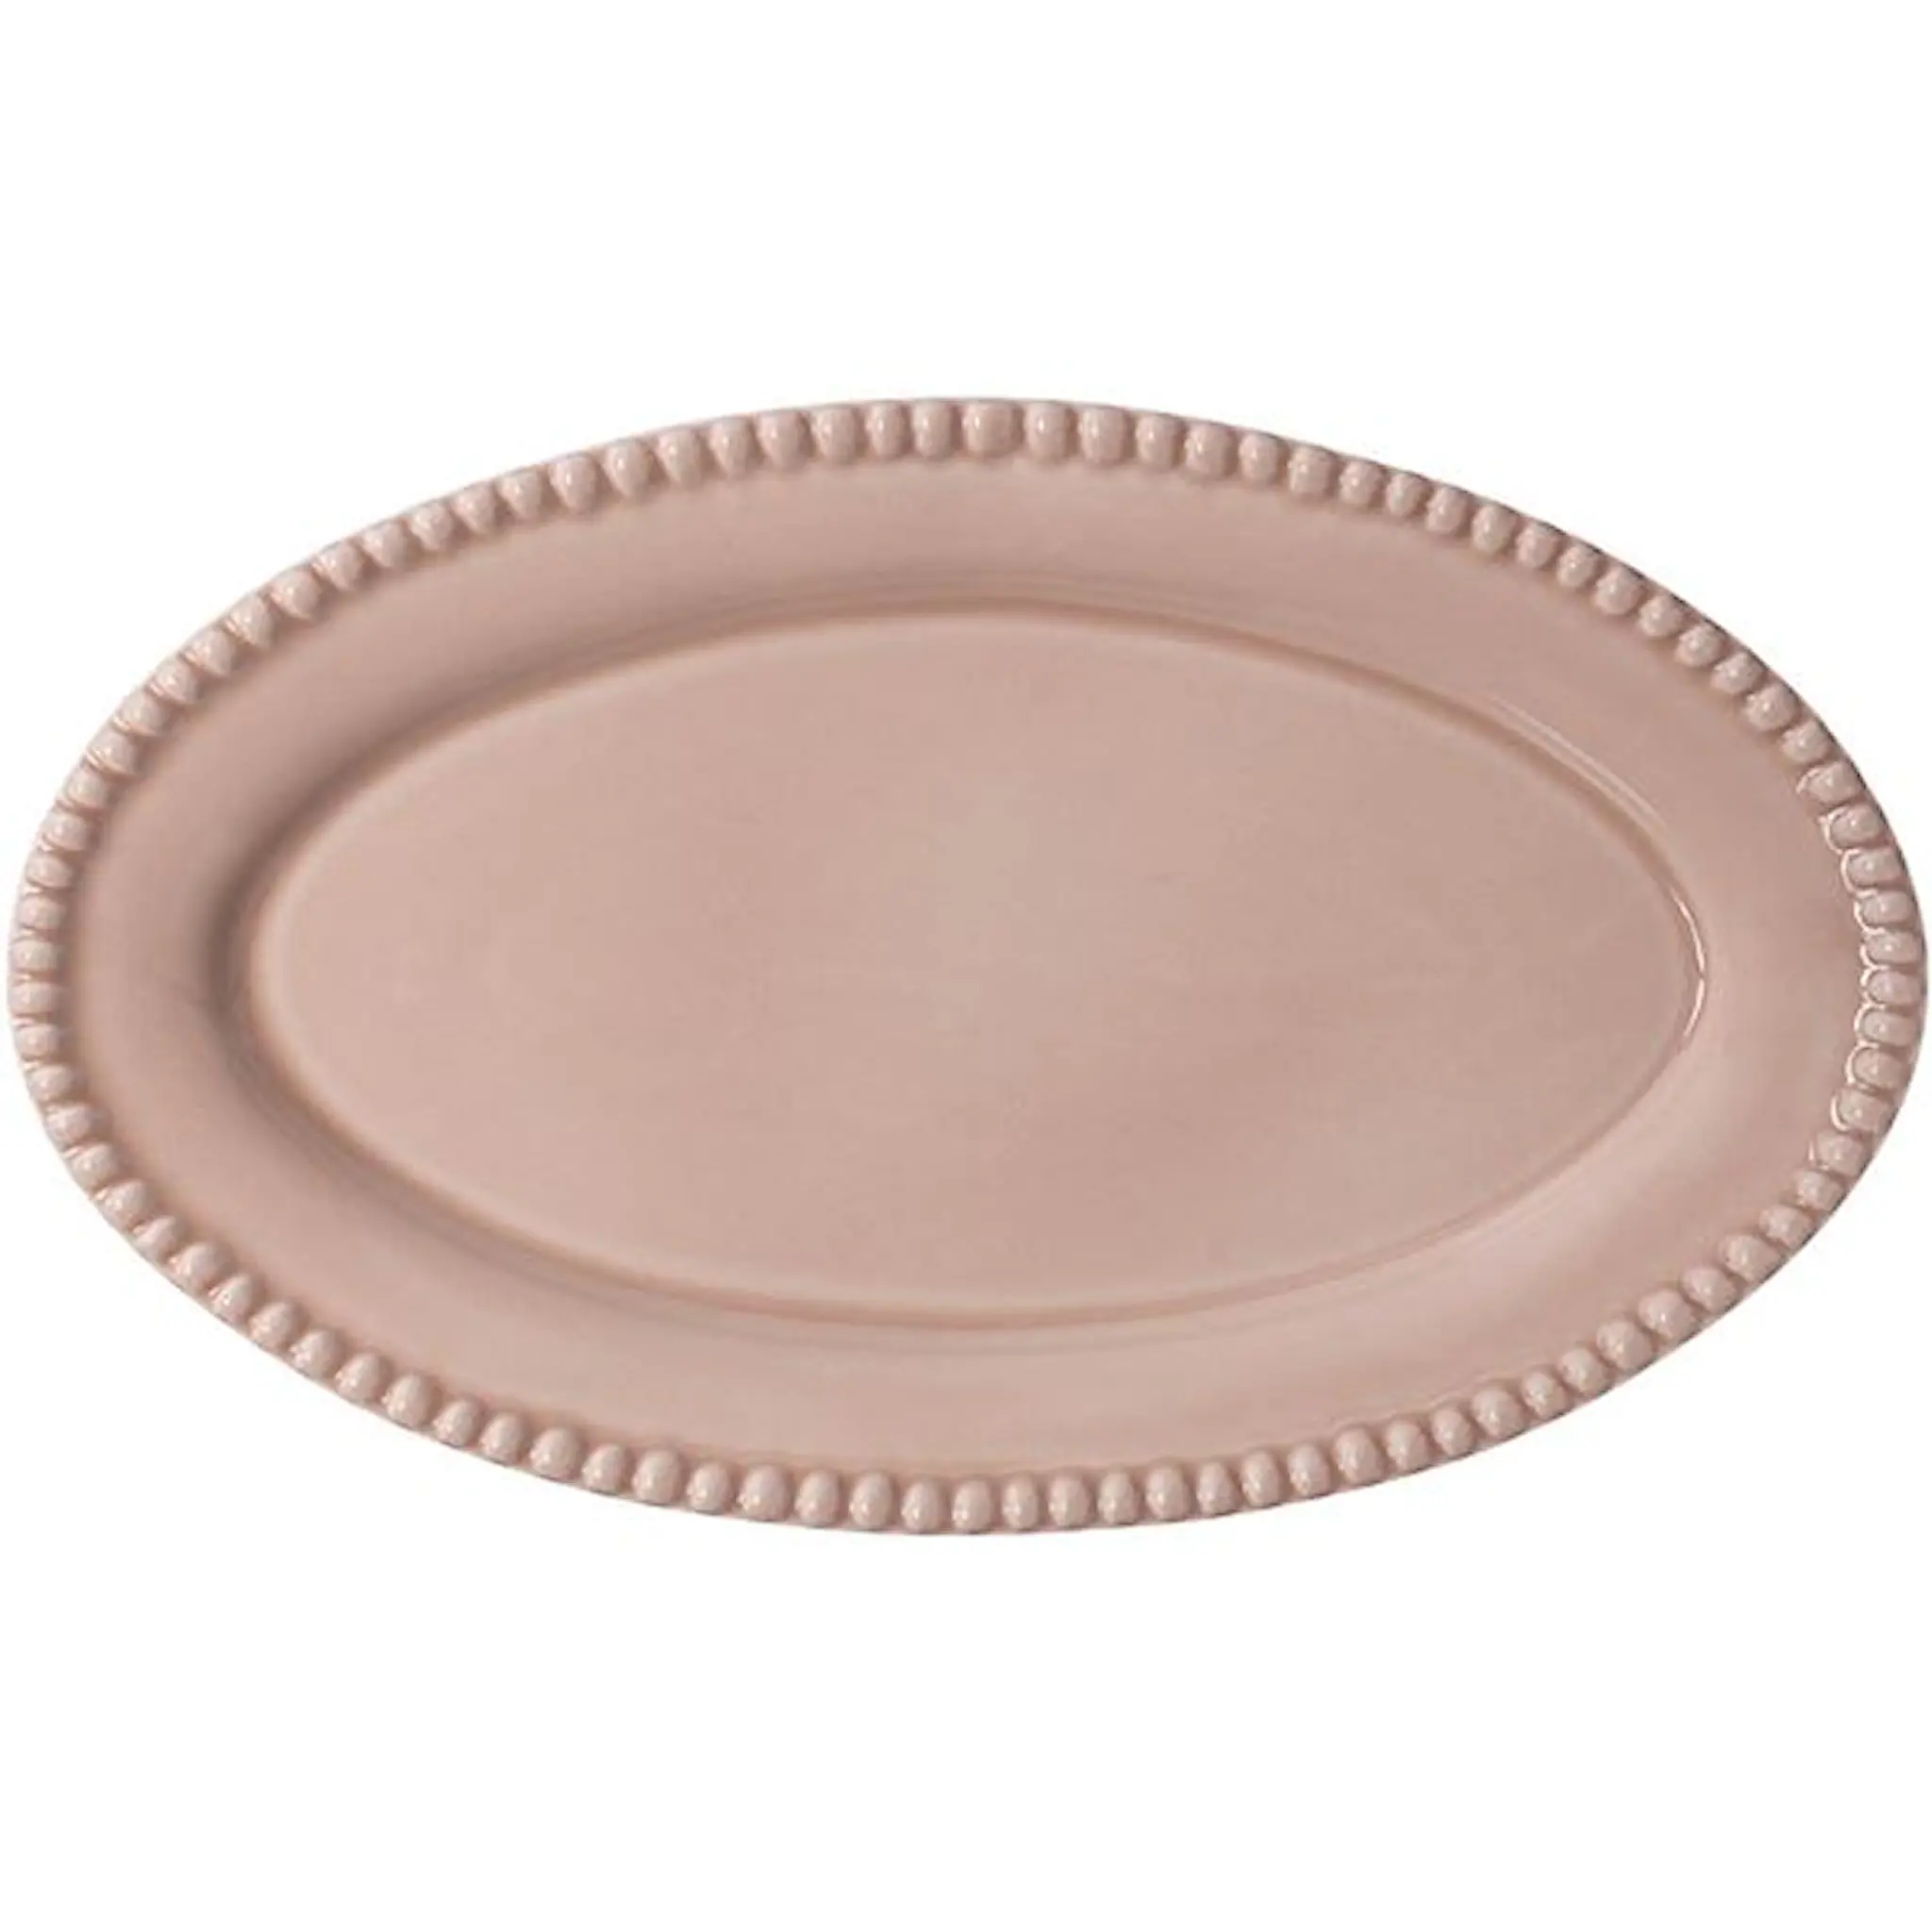 PotteryJo DARIA ovalt serveringsfat 35 cm accolade